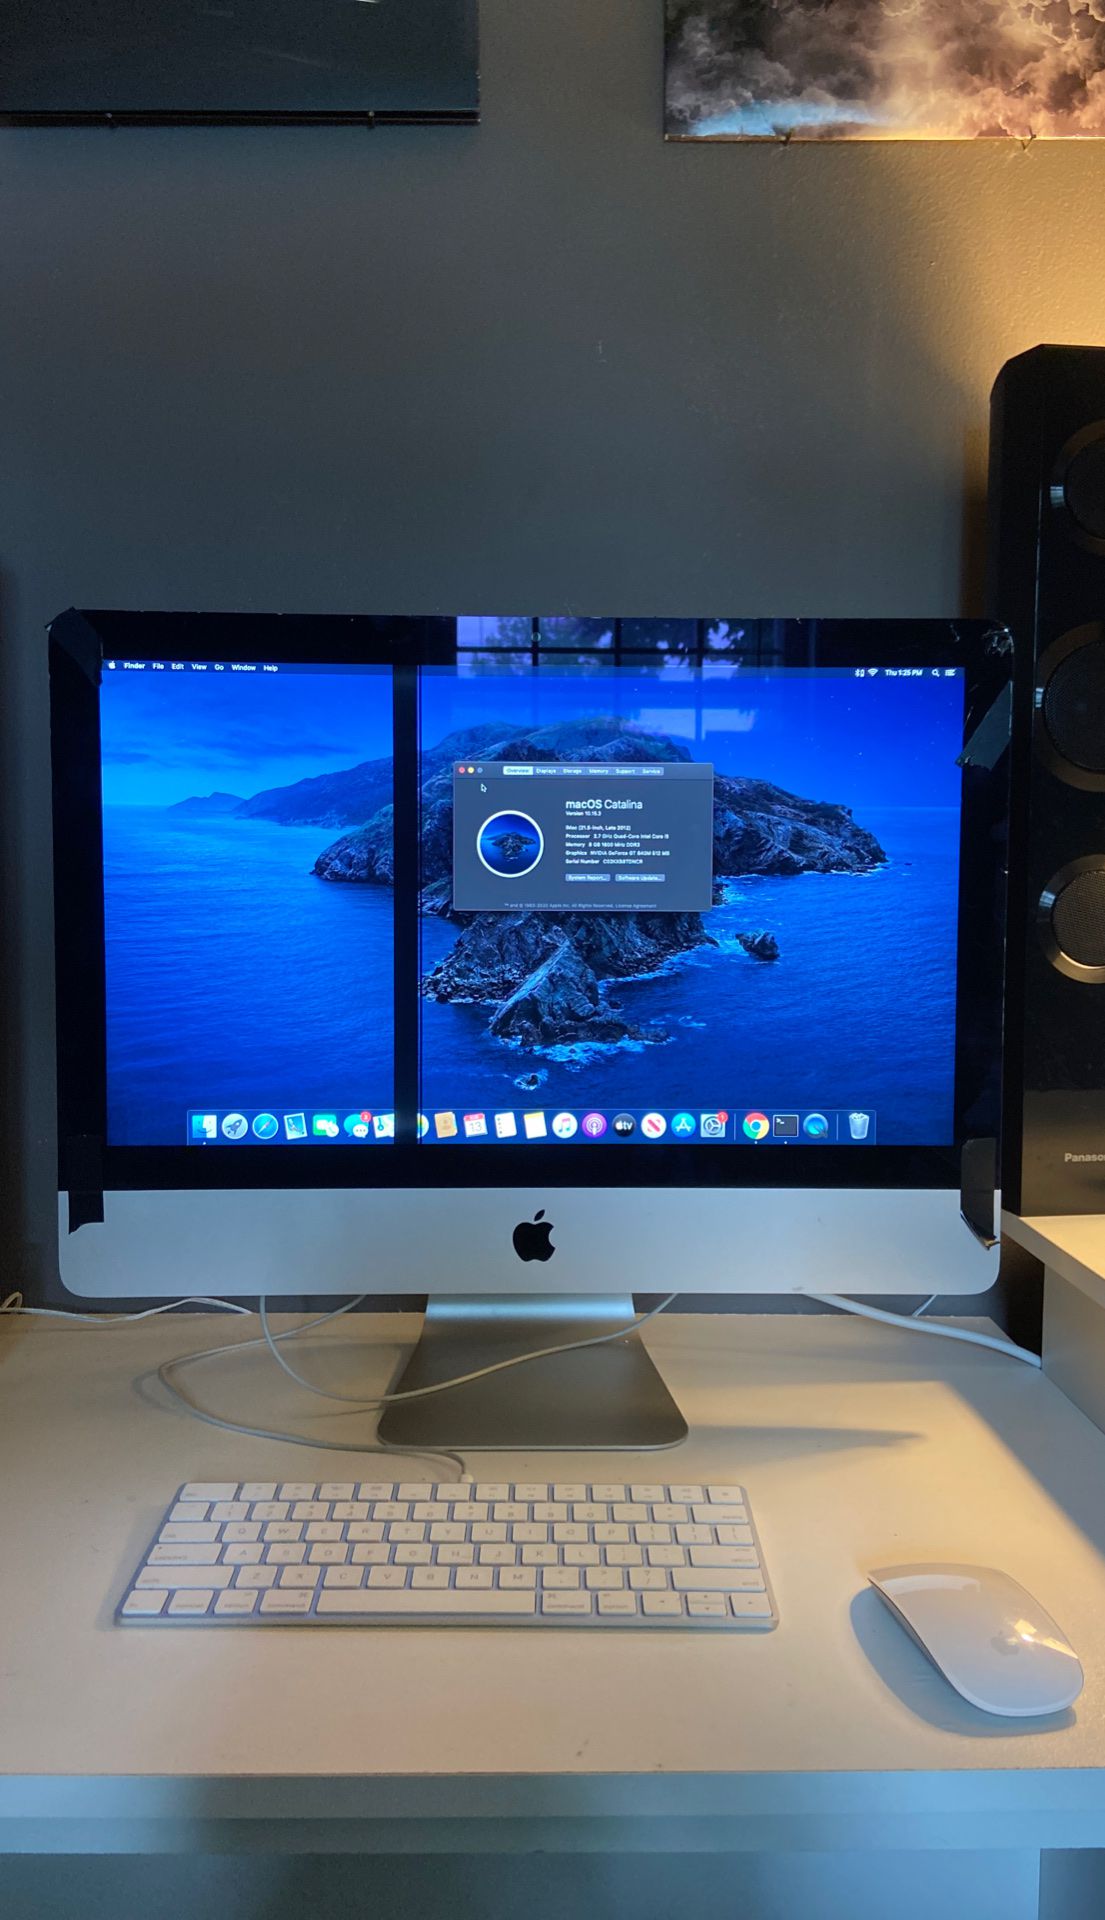 iMac (21.5 inch, late 2012)